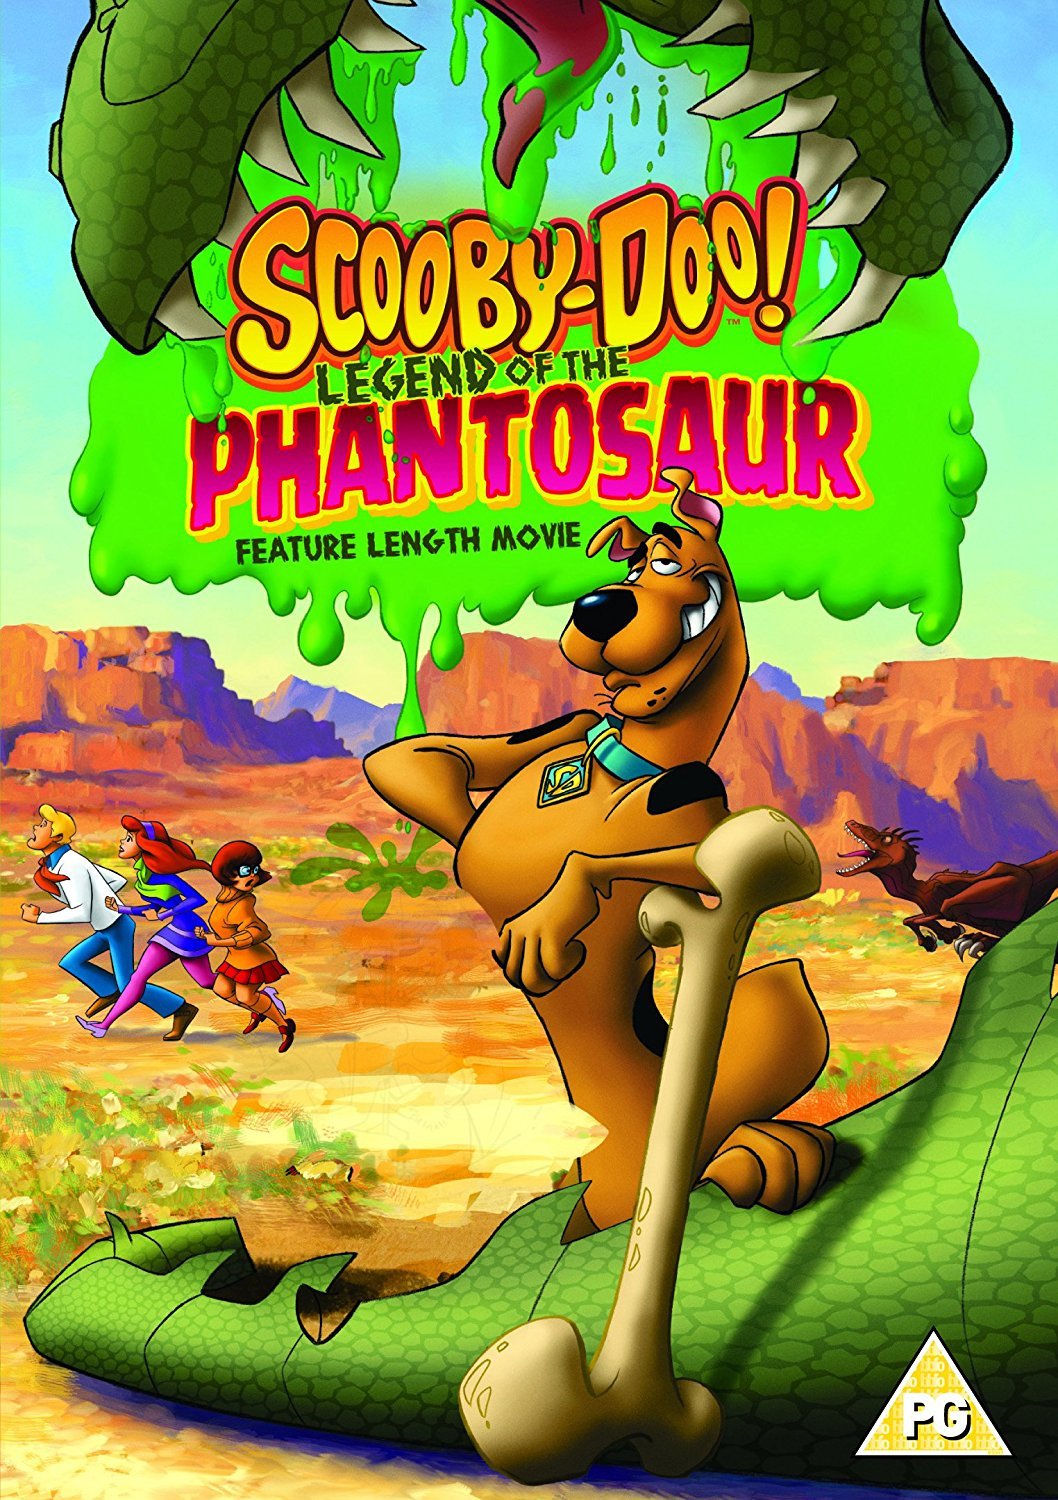 Portada de la película Scooby Doo! Legend of the Phantosaur”